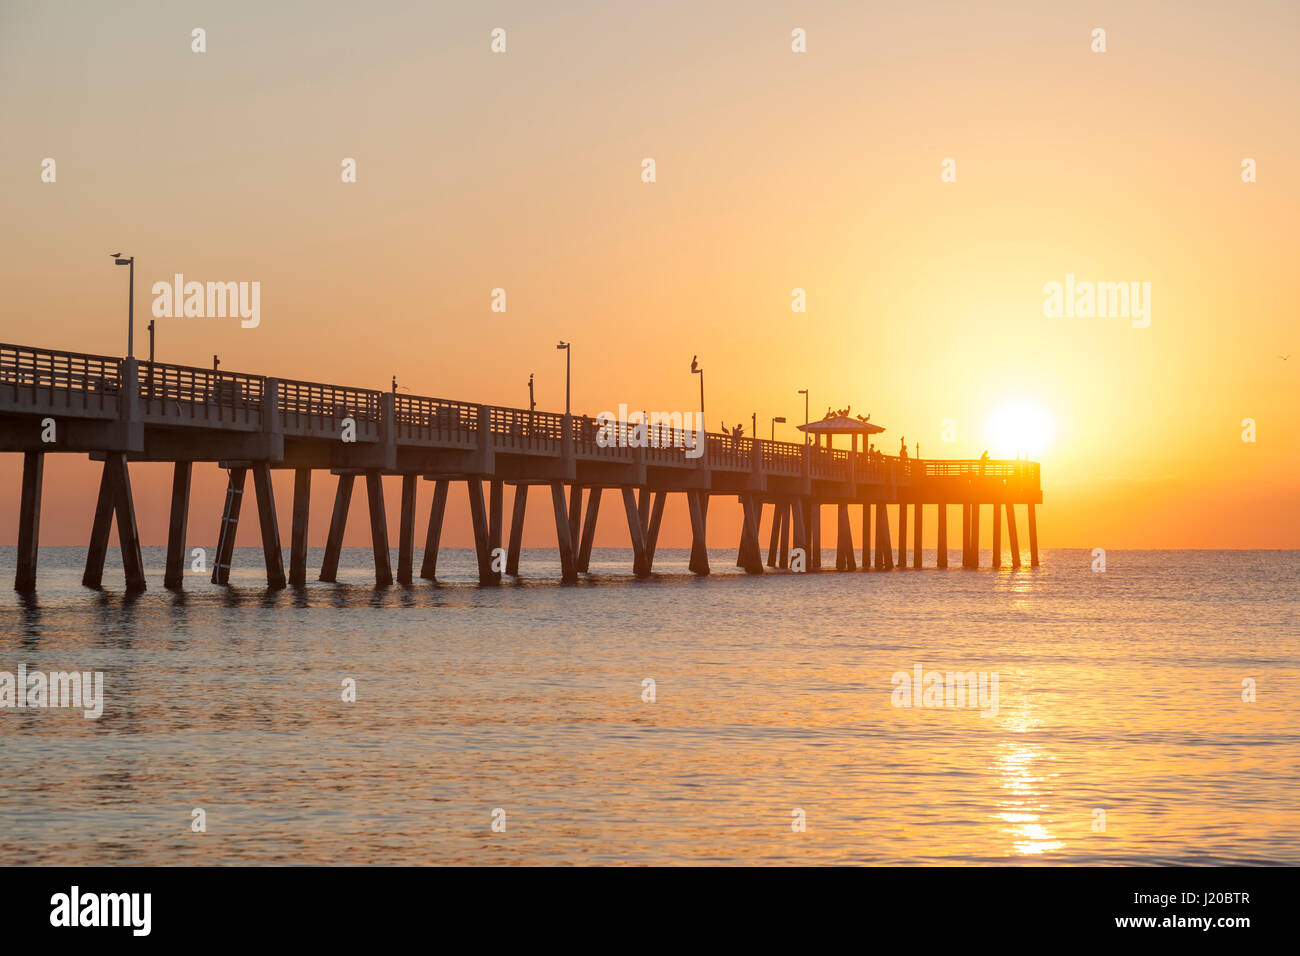 Dania beach fishing pier at sunrise. Hollywood beach, Florida, United States Stock Photo